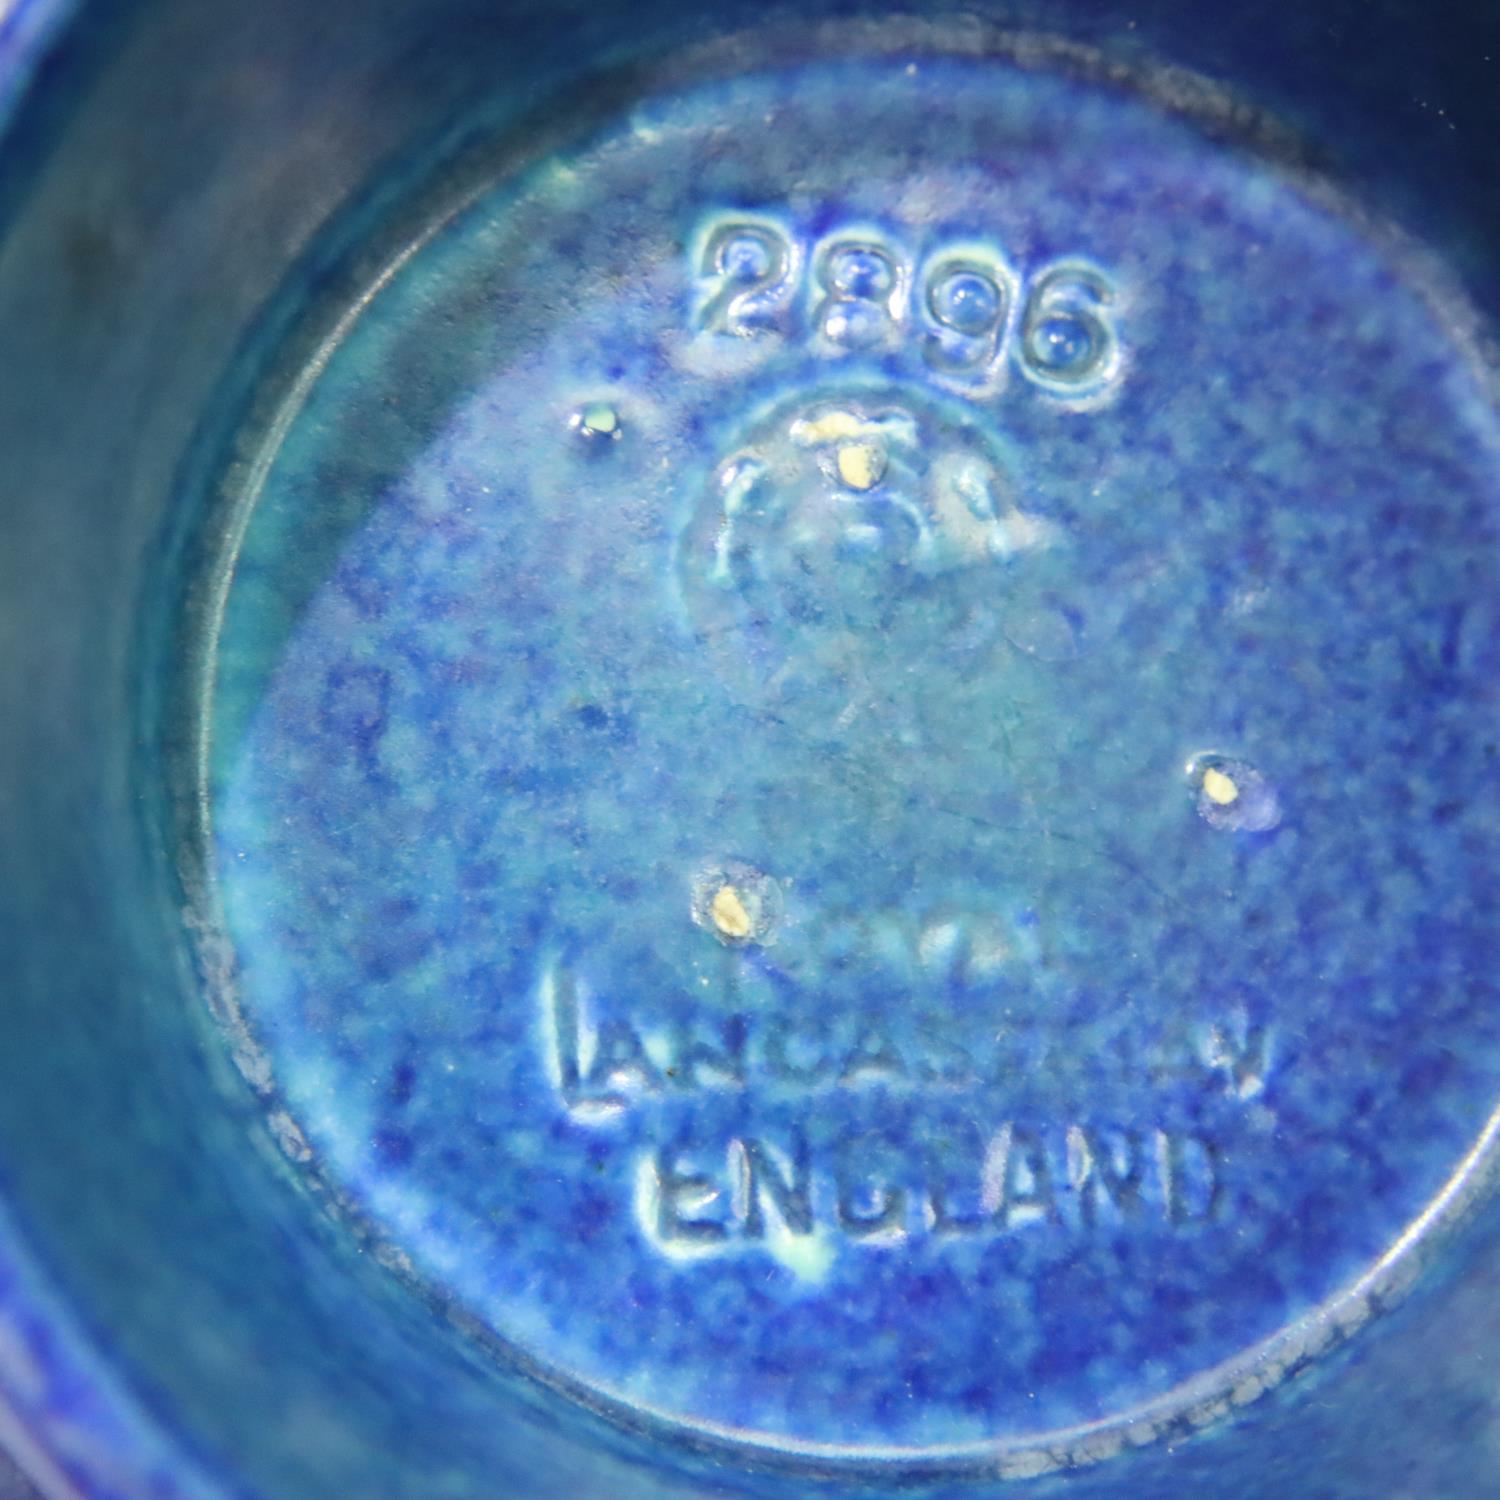 Royal Lancastrian footed bowl, D: 15 cm, amateur restoration to rim. P&P Group 2 (£18+VAT for the - Image 3 of 3